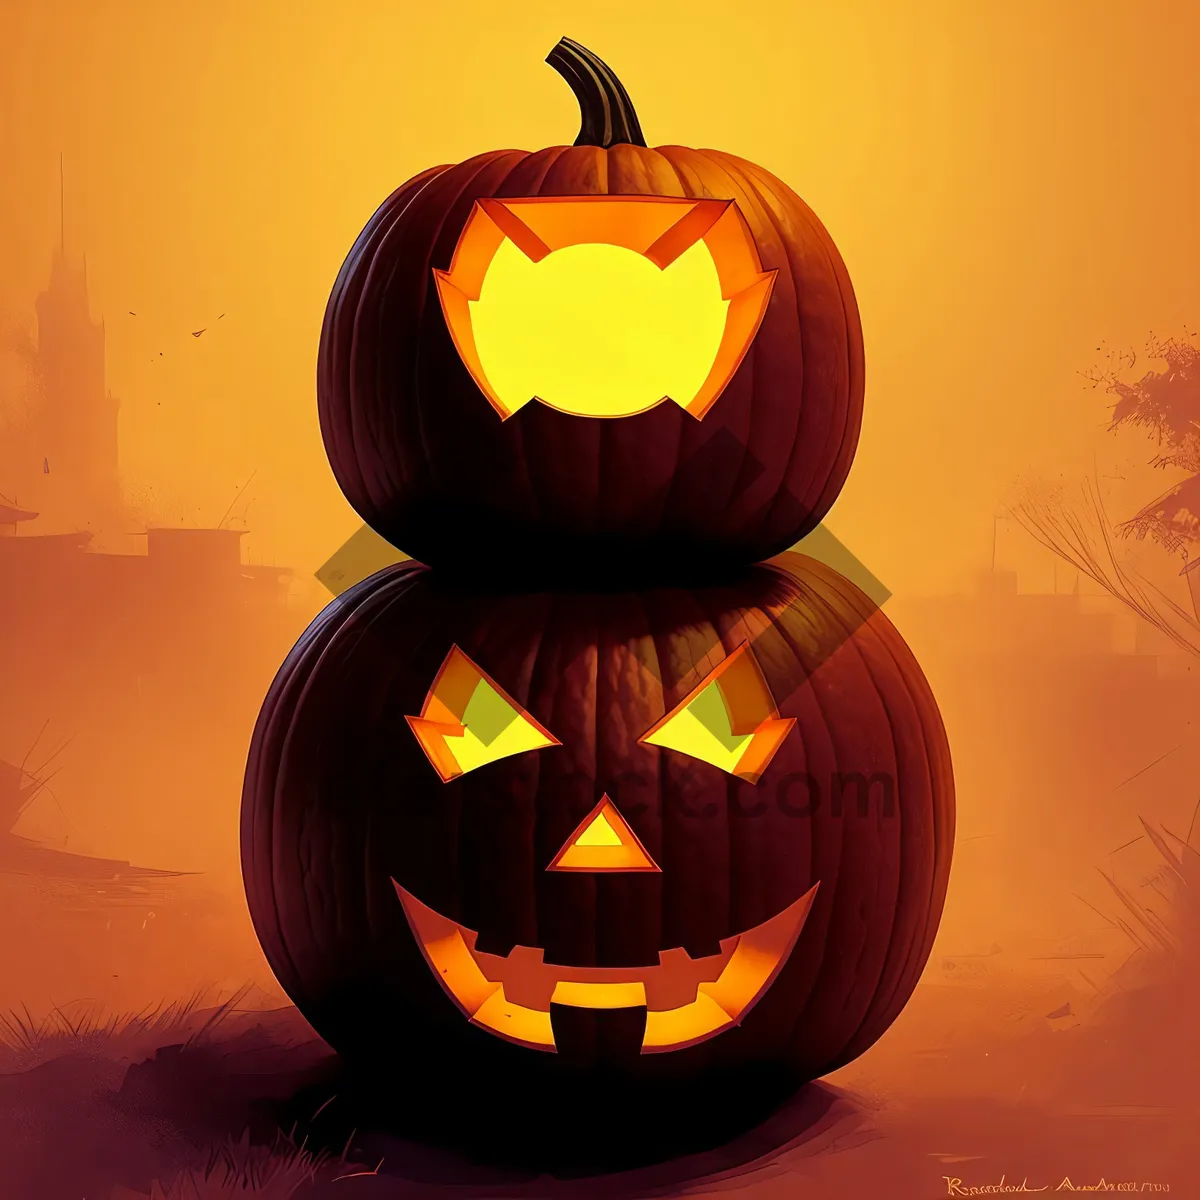 Picture of Spooky Jack-o'-Lantern Illuminating Autumn Night